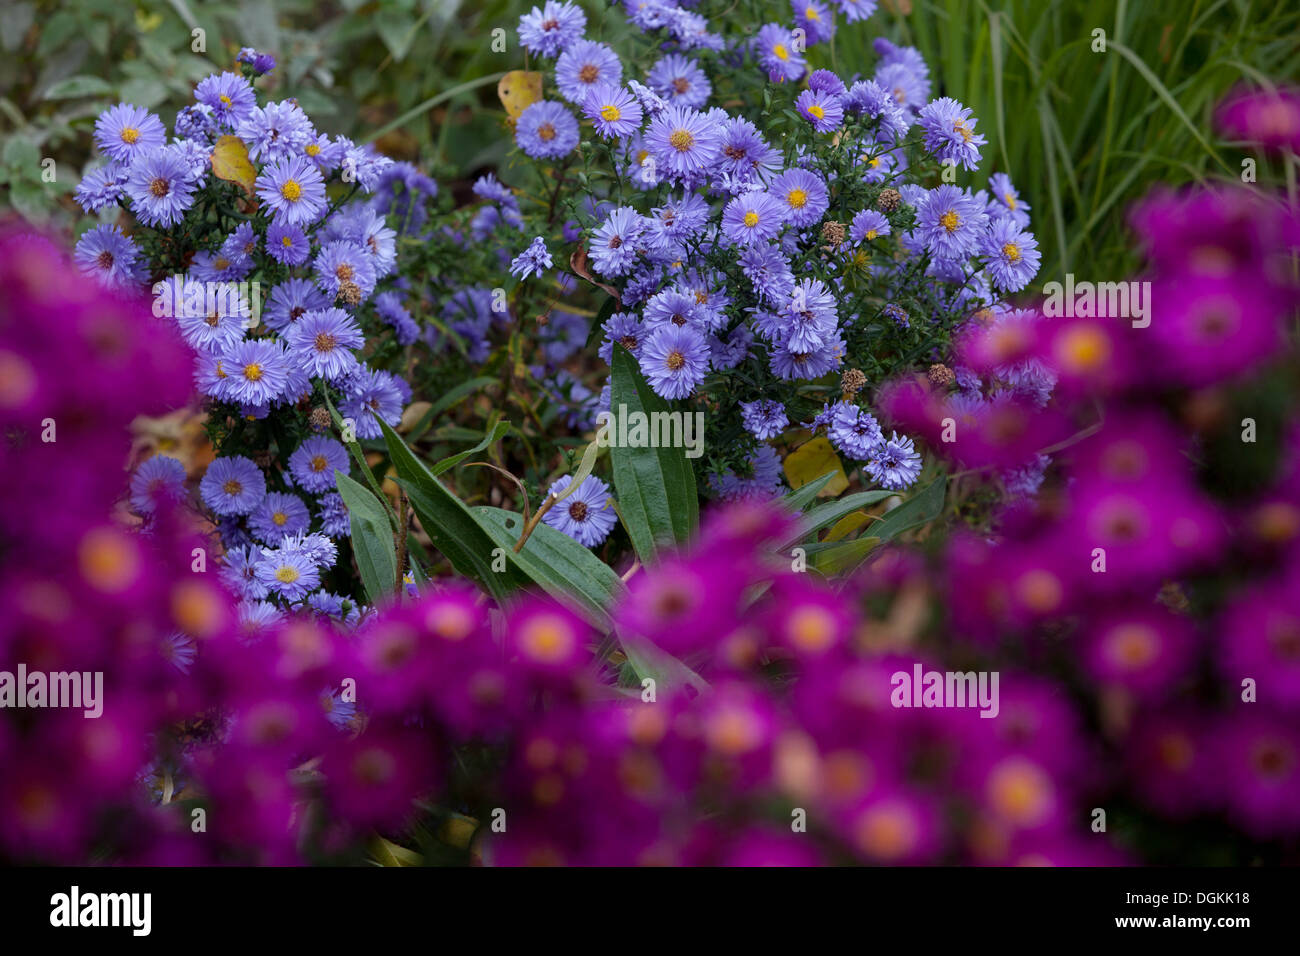 flower, aster, garden, autumn, fall, flora, purple, color, colorful, plant, lush, elegance, nature, magenta Stock Photo